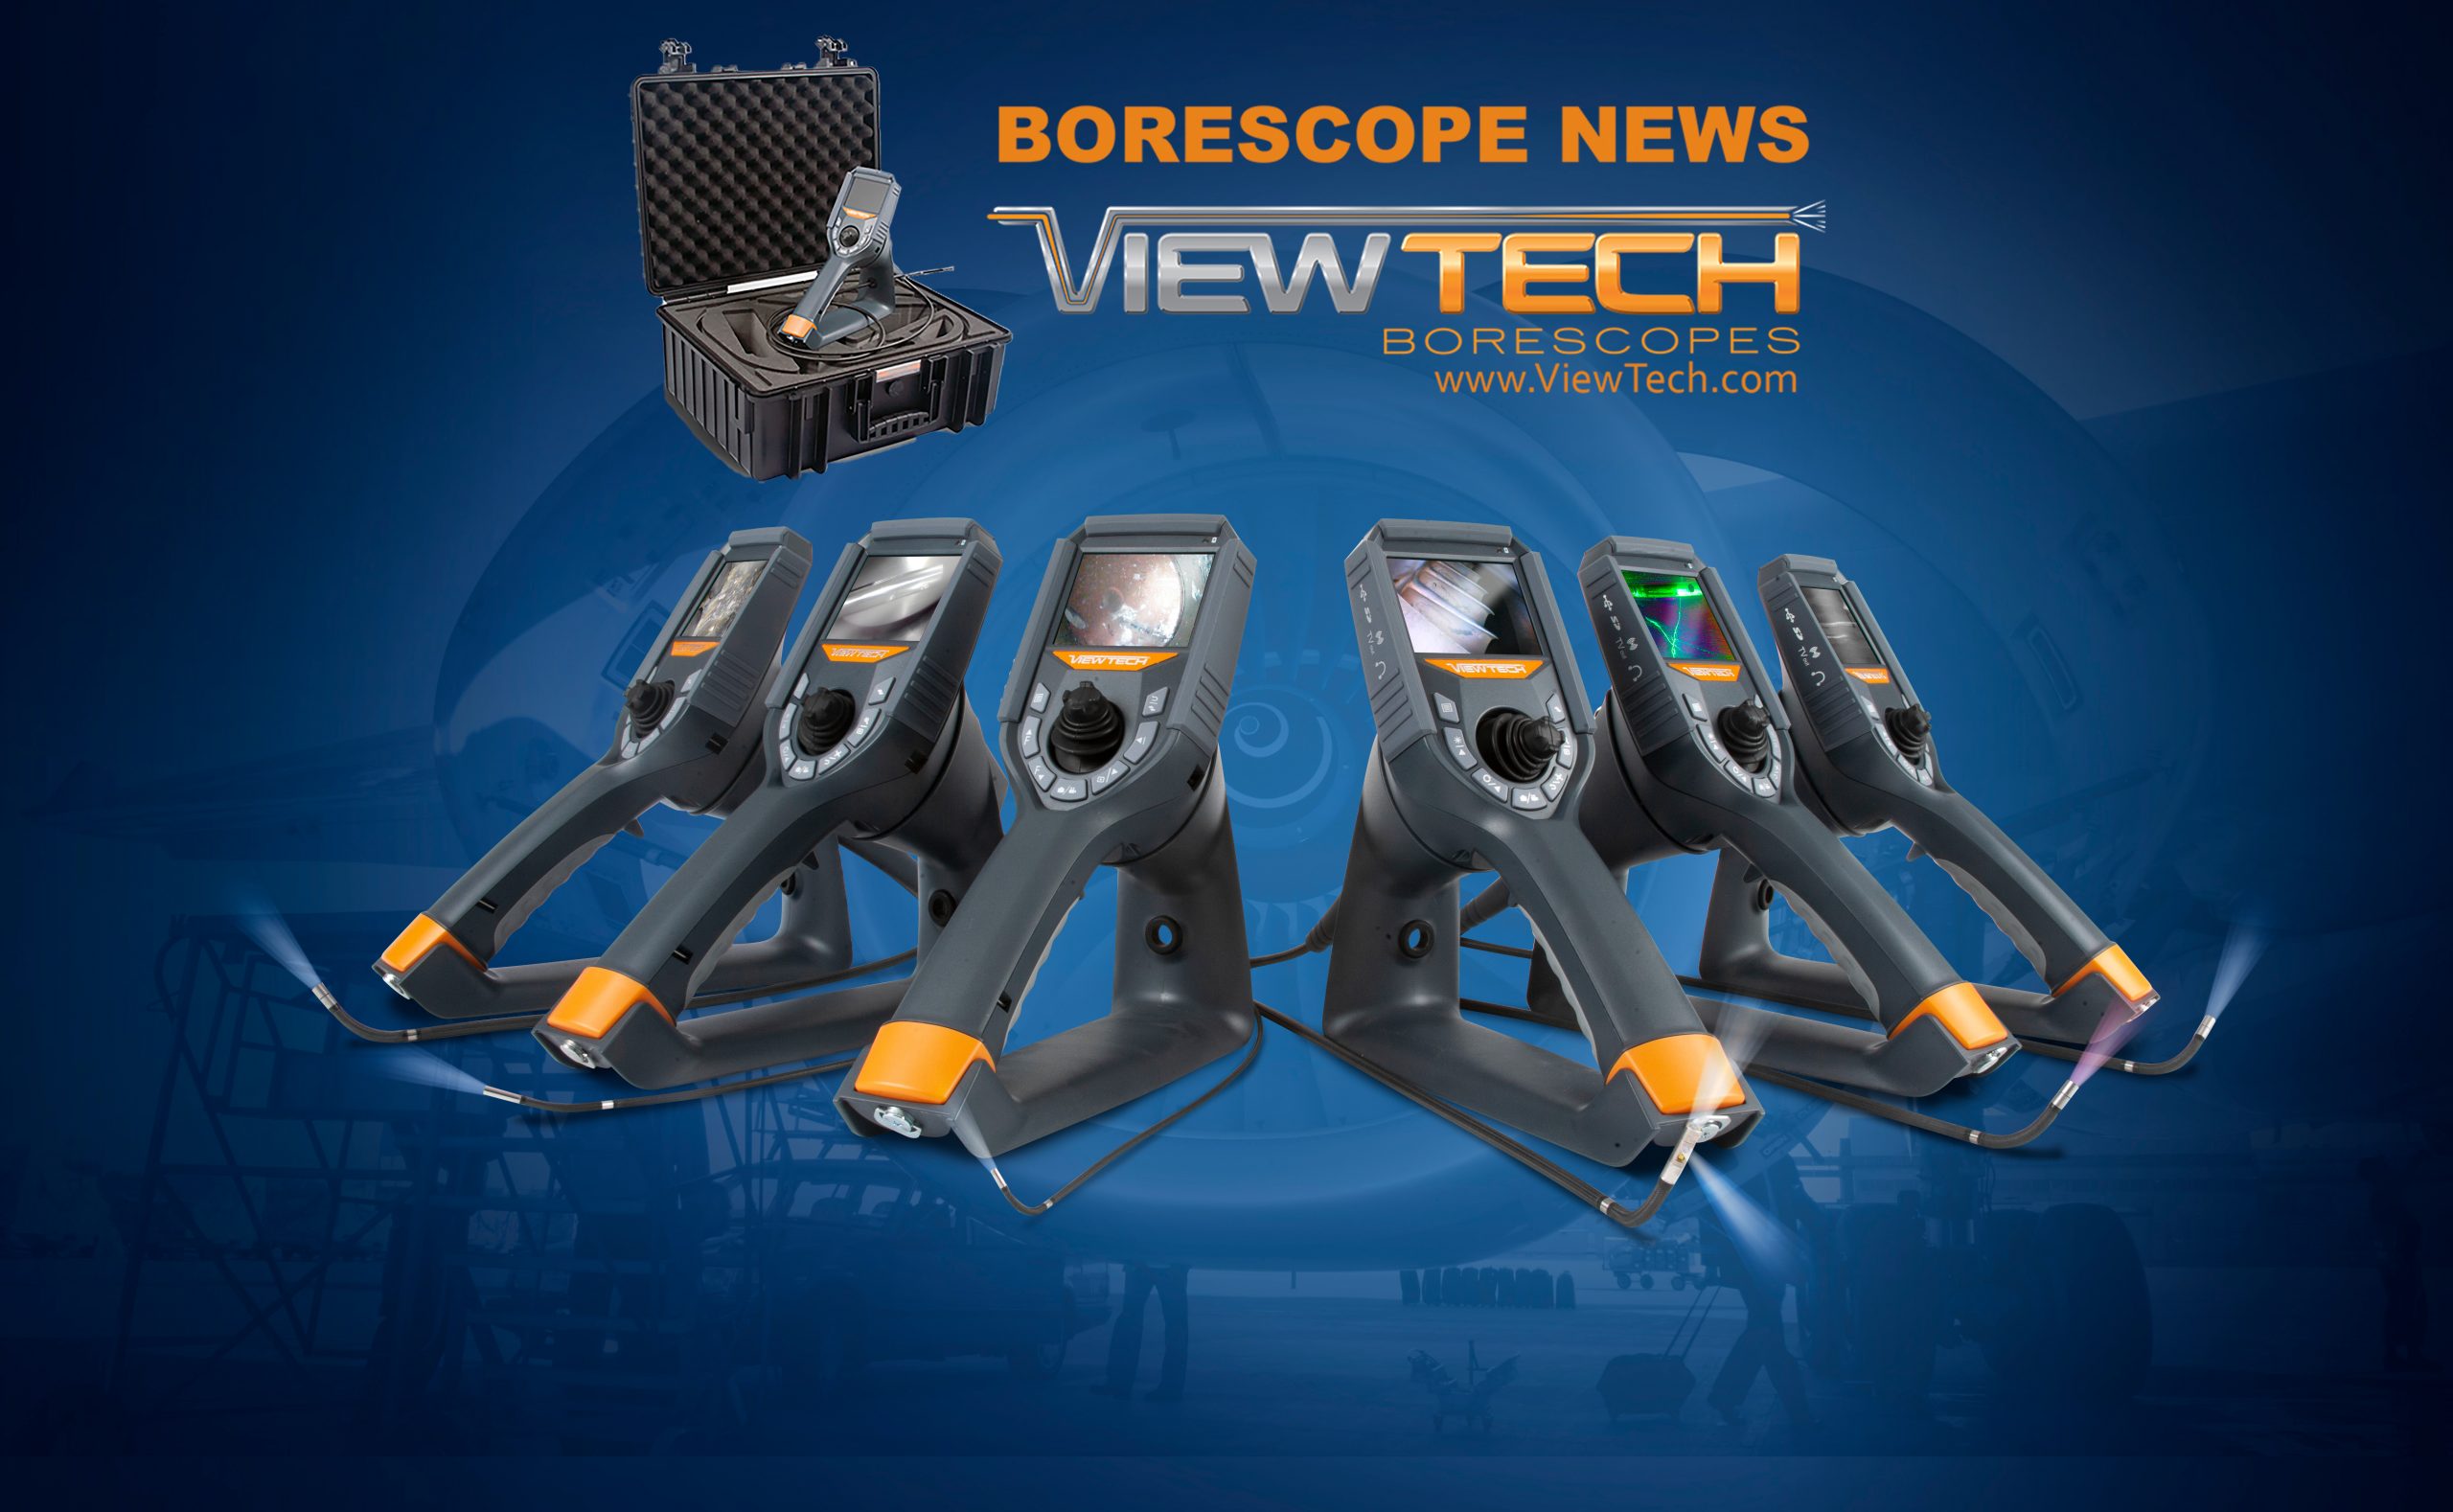 ViewTech Borescopes News